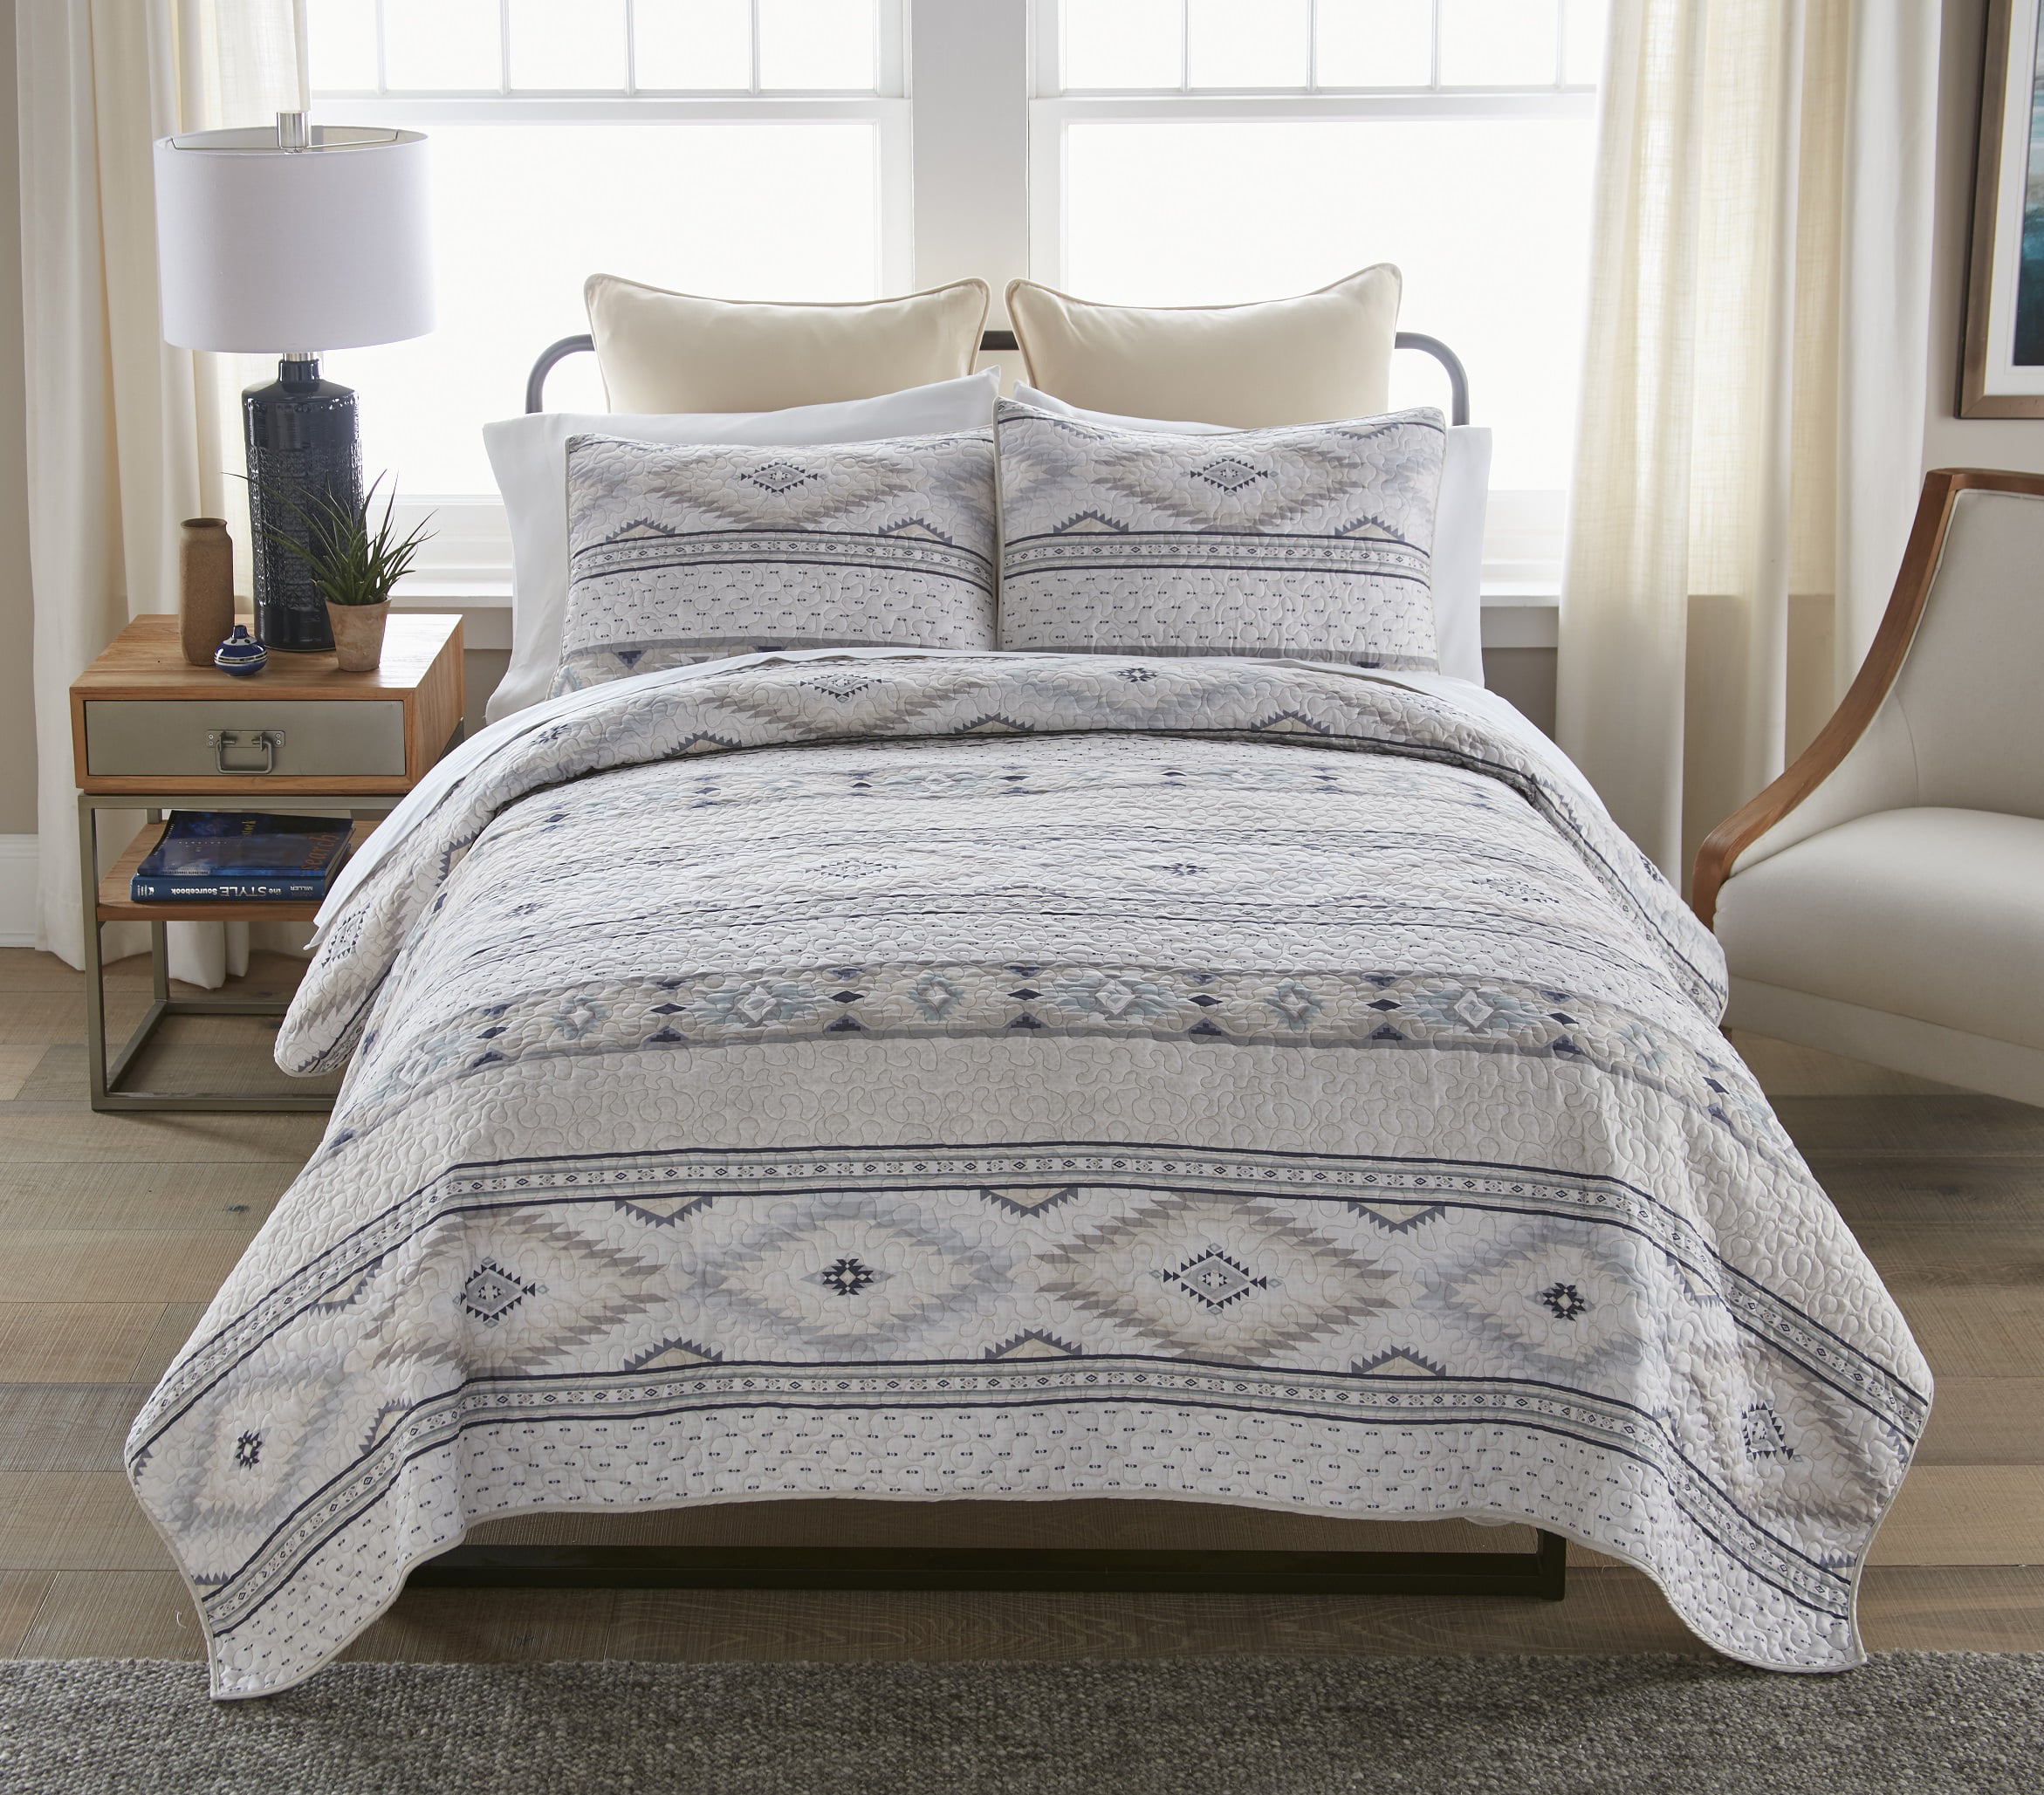 Southwest Twin Reversible Comforter Quilt Bed 3pc Set 2 Shams Bedding Polyester 